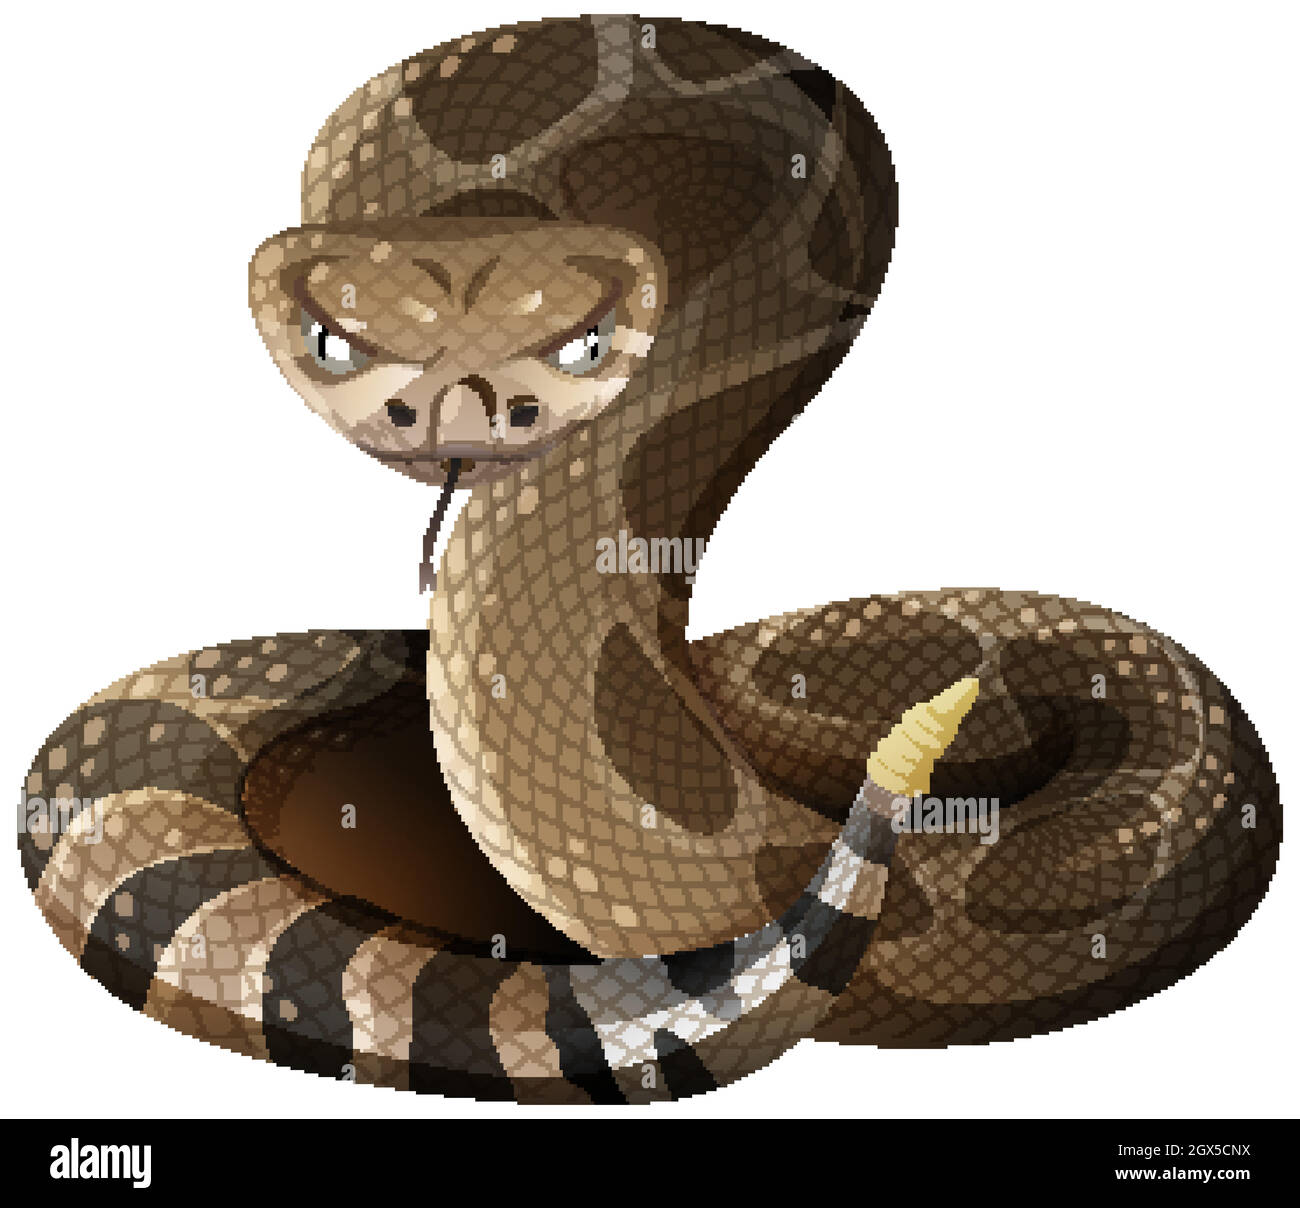 WESTERN Diamondback Rattlesnake en style dessin animé sur fond blanc Illustration de Vecteur